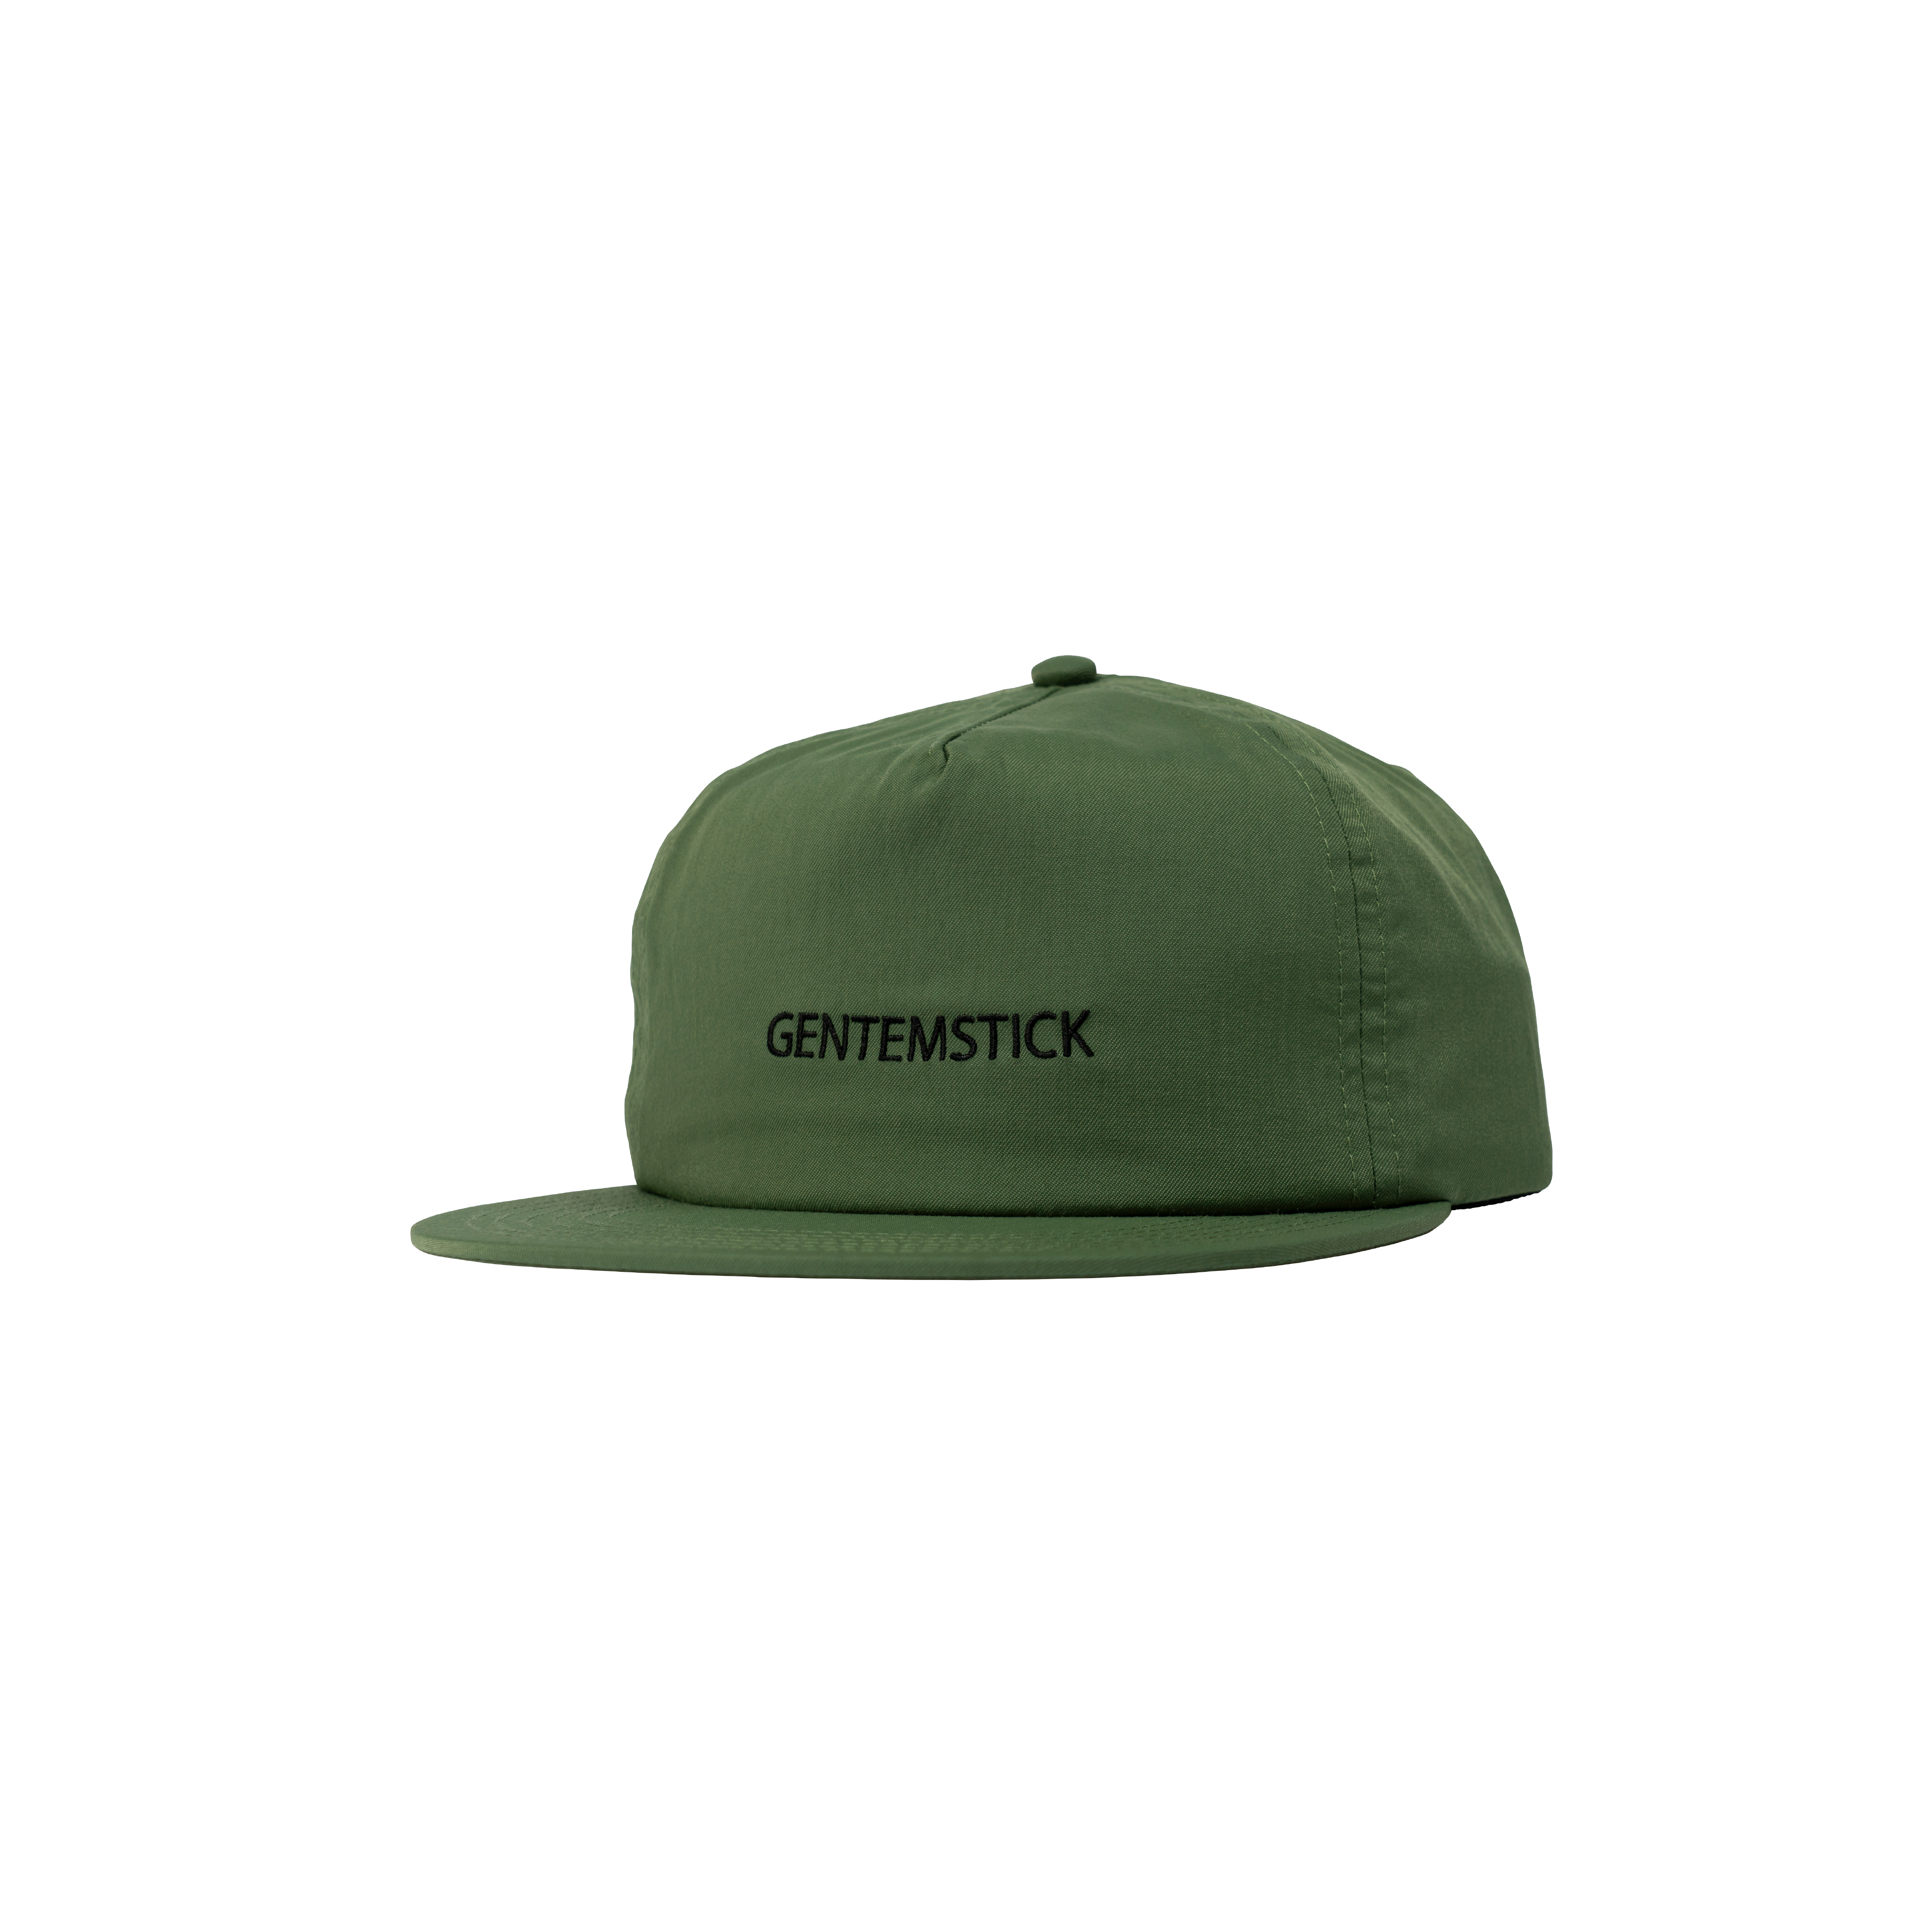 GENTEMSTICK Logo recycle nylon hat